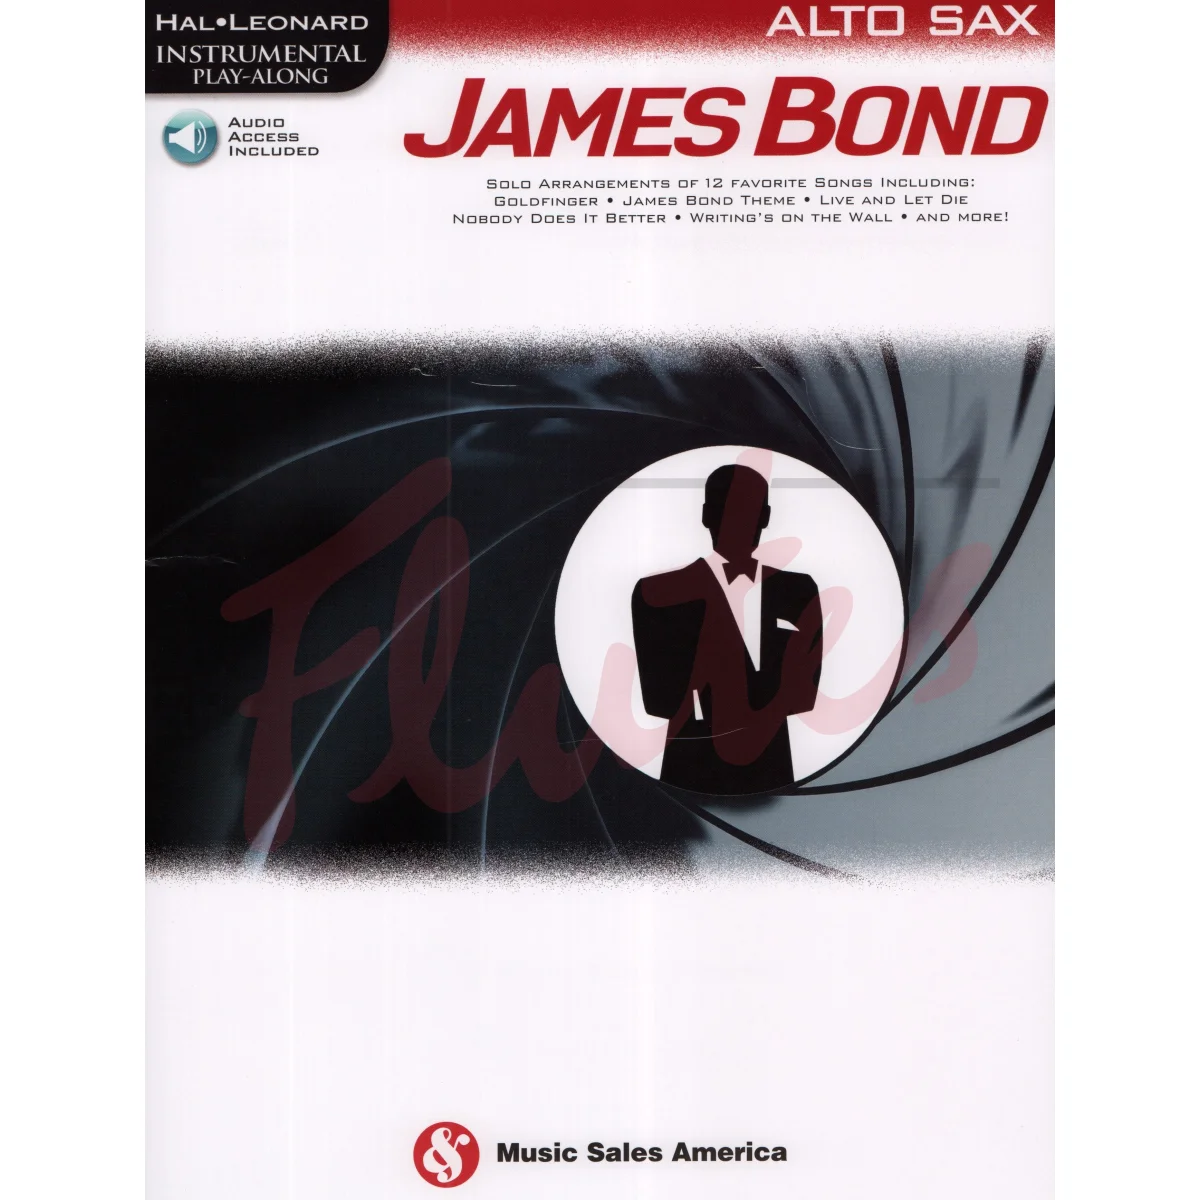 James Bond for Alto Saxophone